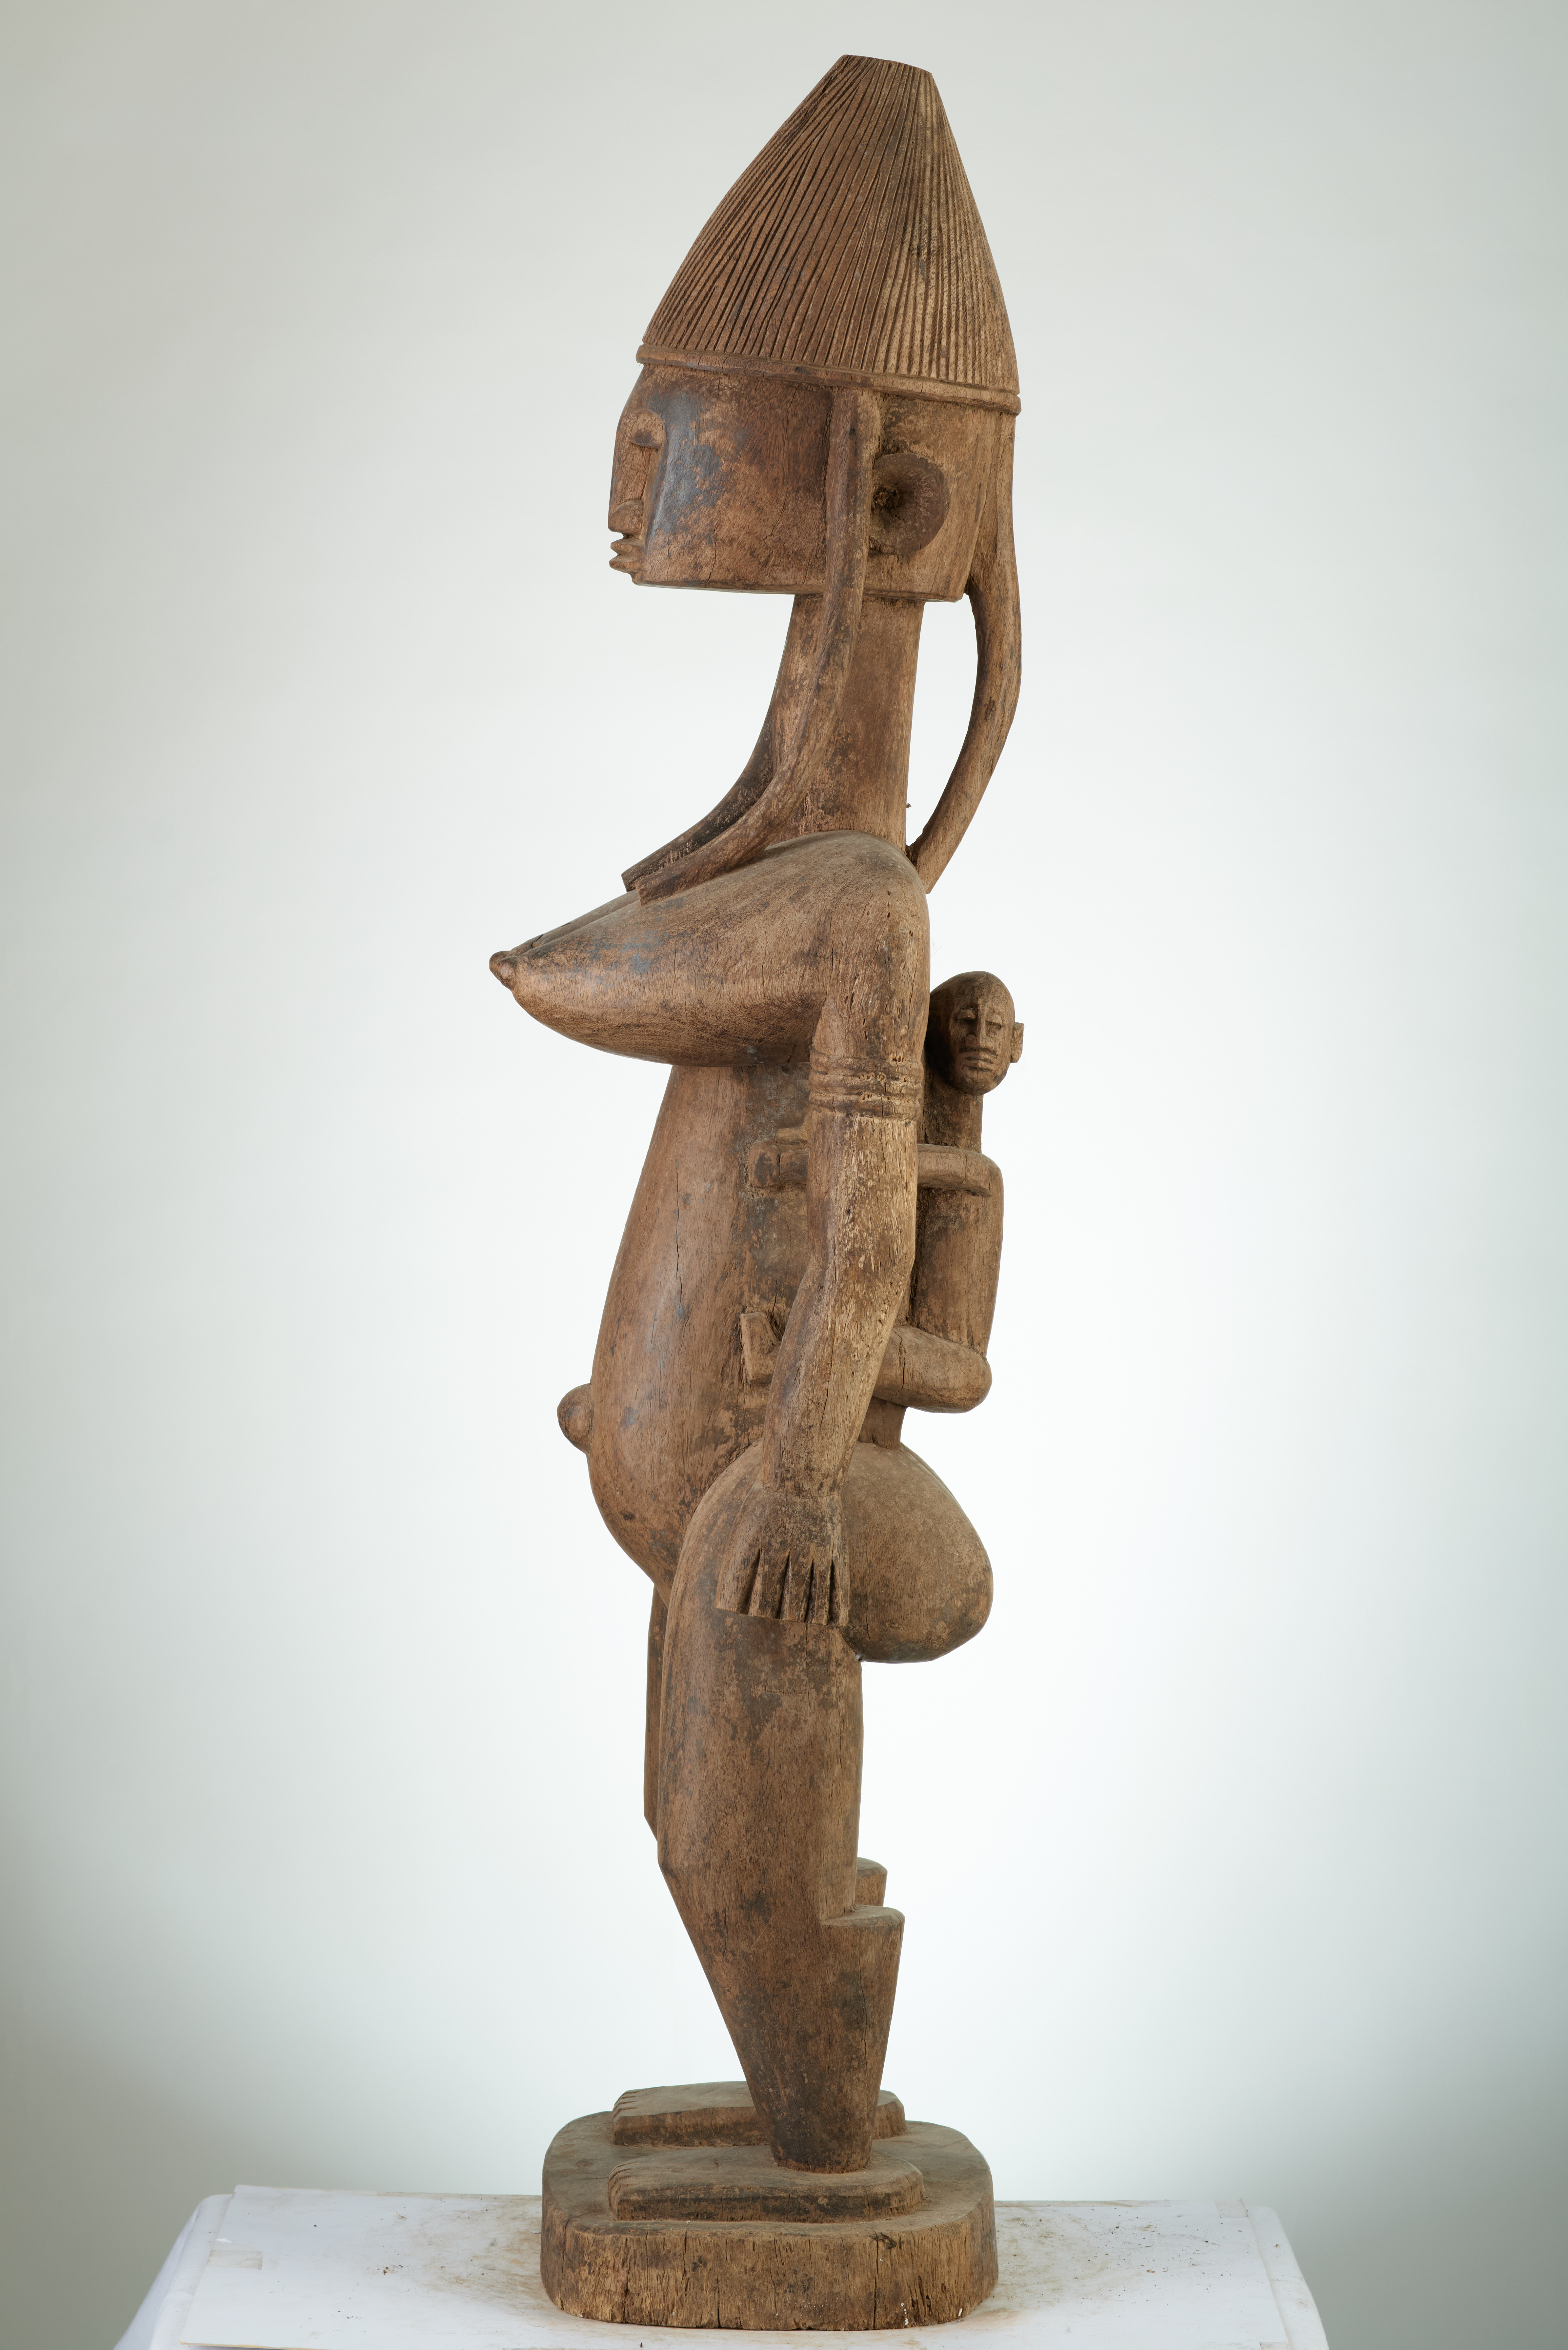 bambara (statue), d`afrique : MALI, statuette bambara (statue), masque ancien africain bambara (statue), art du MALI - Art Africain, collection privées Belgique. Statue africaine de la tribu des bambara (statue), provenant du MALI, 1881:Maternité Bambara .Ancêtre debout portant son enfant dans le dos, nommé Guandous ou appartenant à la societé GUAN H100cm.La coiffure en forme de crête et une forte poitrinne 1ère moitié 20eme sc
( col.Sibiry Malien)

Rechtstaand Bambara  moederschap.Een voorouder dat haar kind draagt op haar rug Guandousou genaamd.Ze maakt deel uit van de GUAN societeit.Ze heeft een  mooie haartooi in kamvorm en grote borsten. 1ste helft 20ste eeuw.(Kol.SIBIRY) . art,culture,masque,statue,statuette,pot,ivoire,exposition,expo,masque original,masques,statues,statuettes,pots,expositions,expo,masques originaux,collectionneur d`art,art africain,culture africaine,masque africain,statue africaine,statuette africaine,pot africain,ivoire africain,exposition africain,expo africain,masque origina africainl,masques africains,statues africaines,statuettes africaines,pots africains,expositions africaines,expo africaines,masques originaux  africains,collectionneur d`art africain